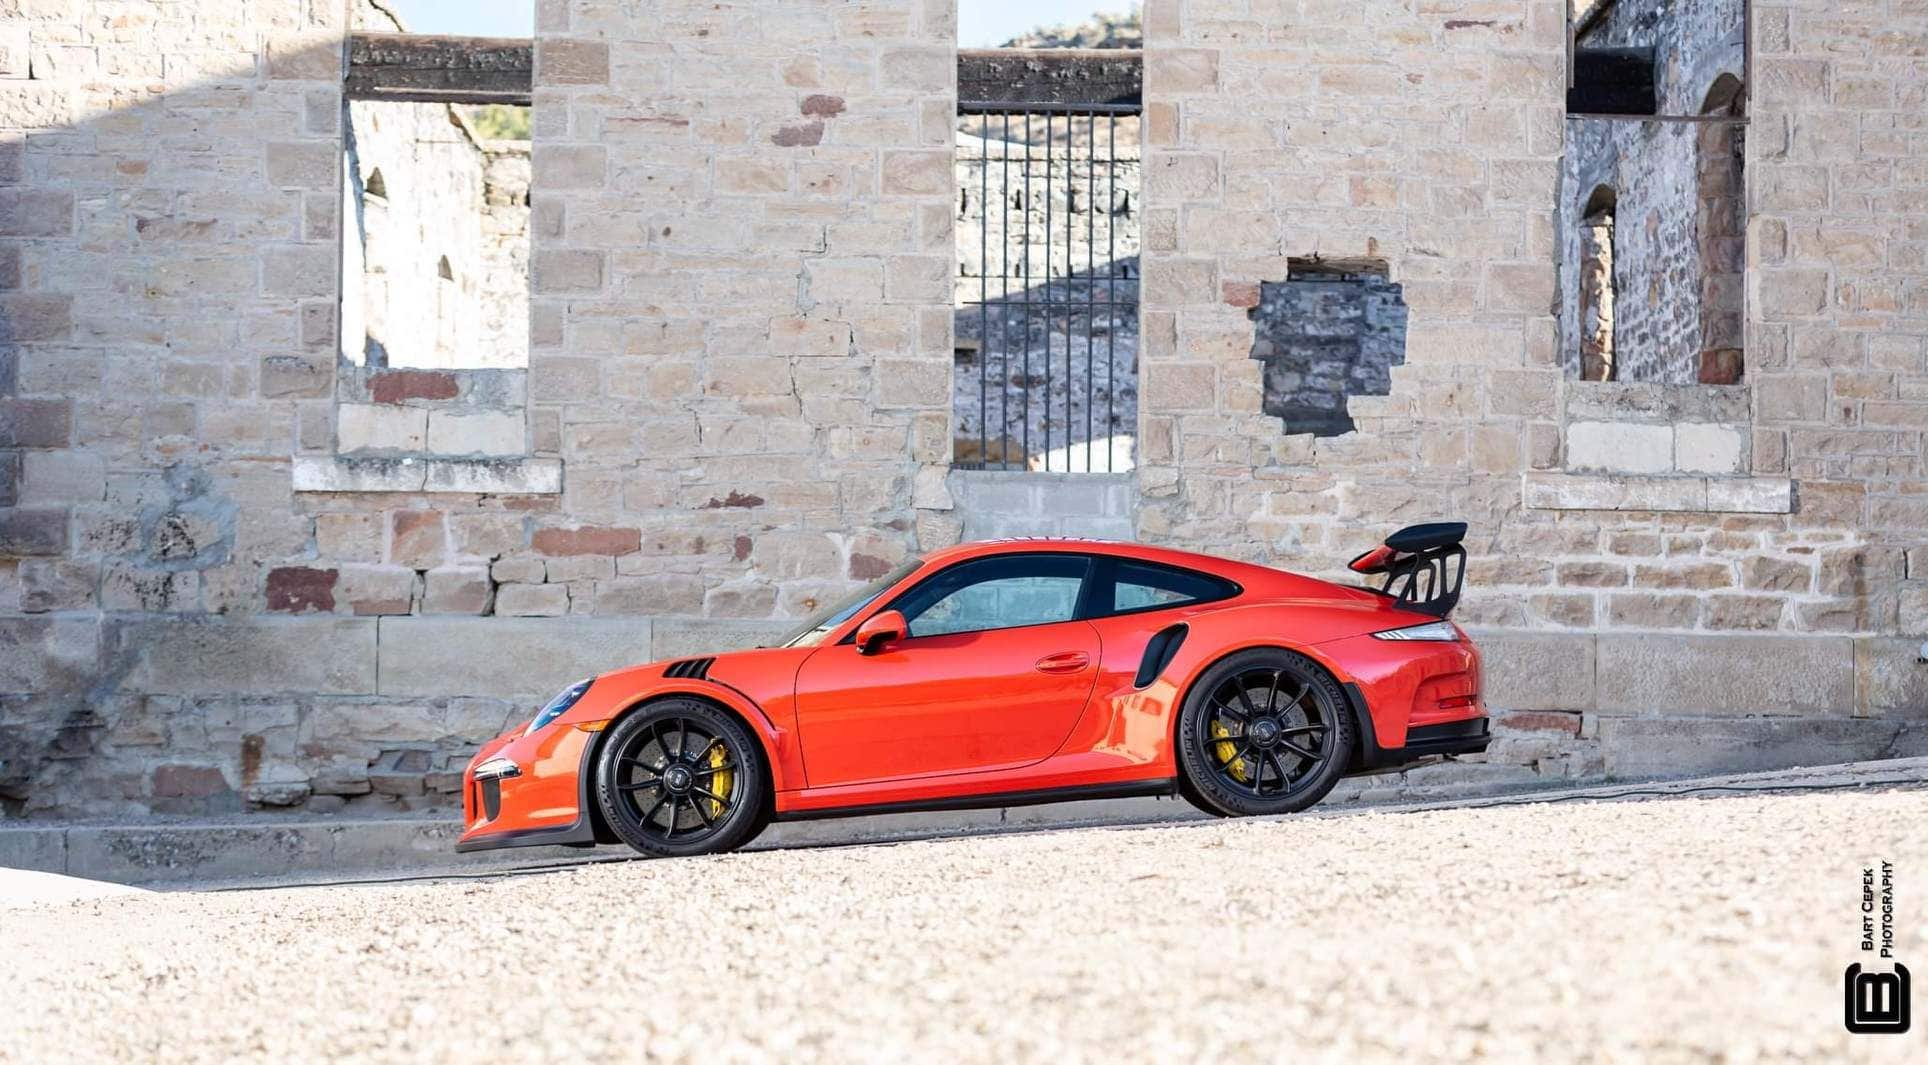 2016 Porsche GT3 - 2016 Porsche 911 GT3 RS - Used - VIN WP0AF2A99GS192898 - 7,300 Miles - 6 cyl - 2WD - Automatic - Coupe - Orange - Boise, ID 83714, United States